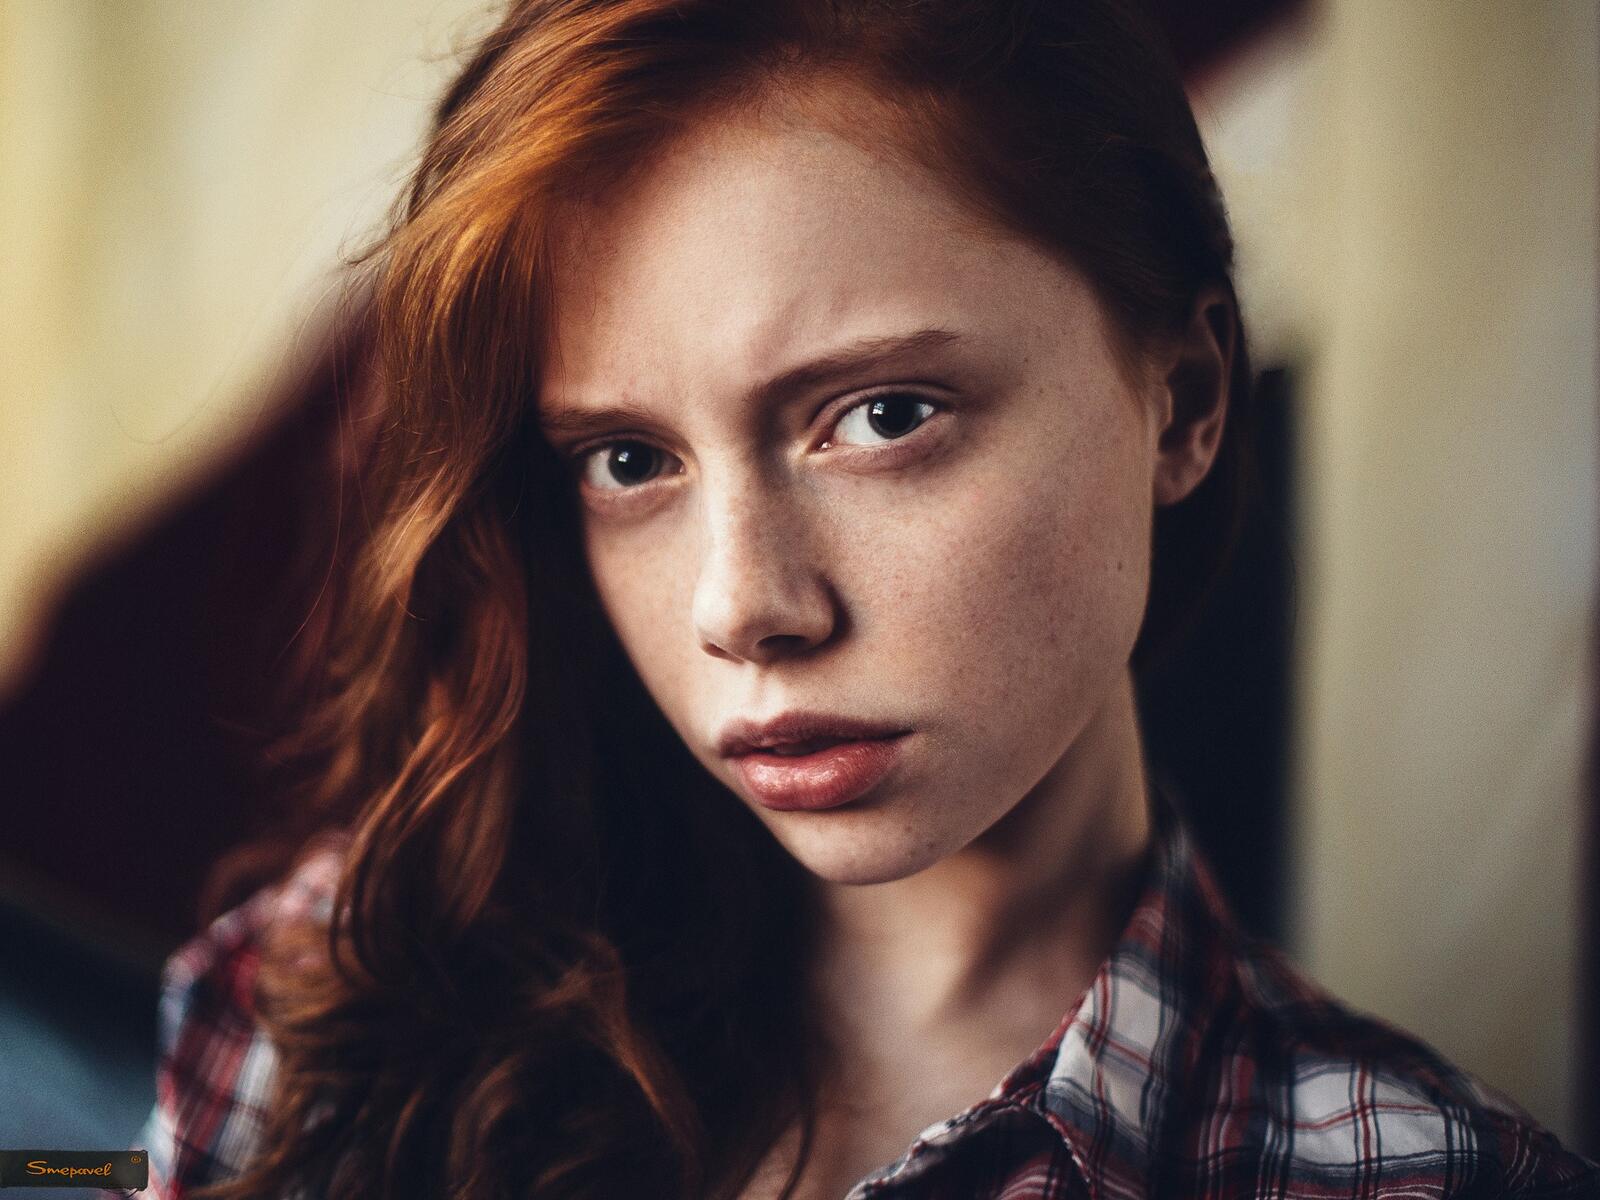 Wallpapers ekaterina yasnogorodskaya model redhead on the desktop